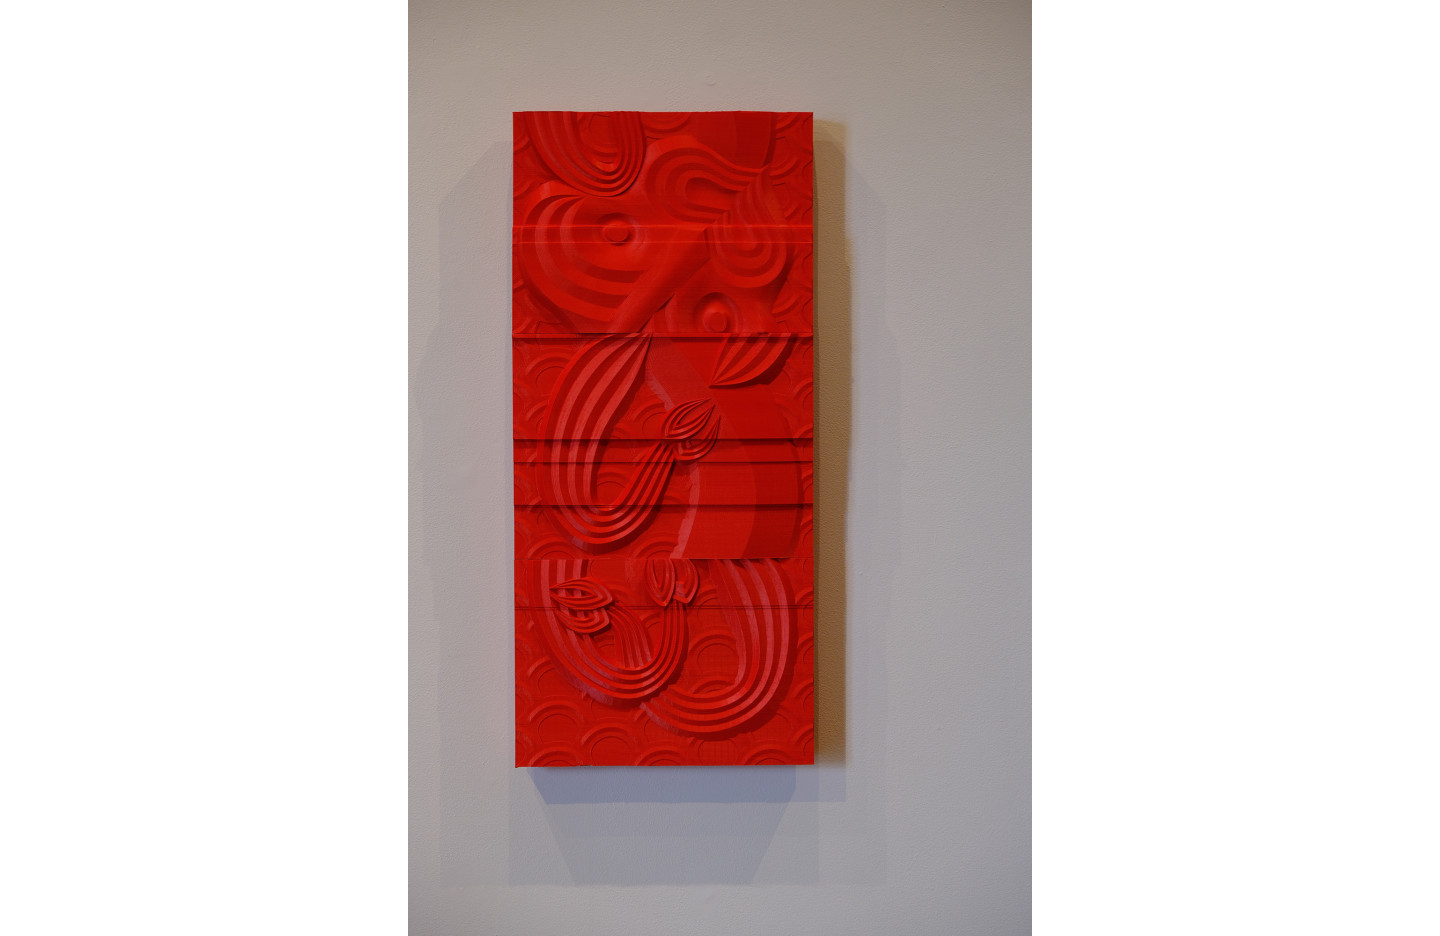 Te Ao Mariko, Ramp Gallery (2020)